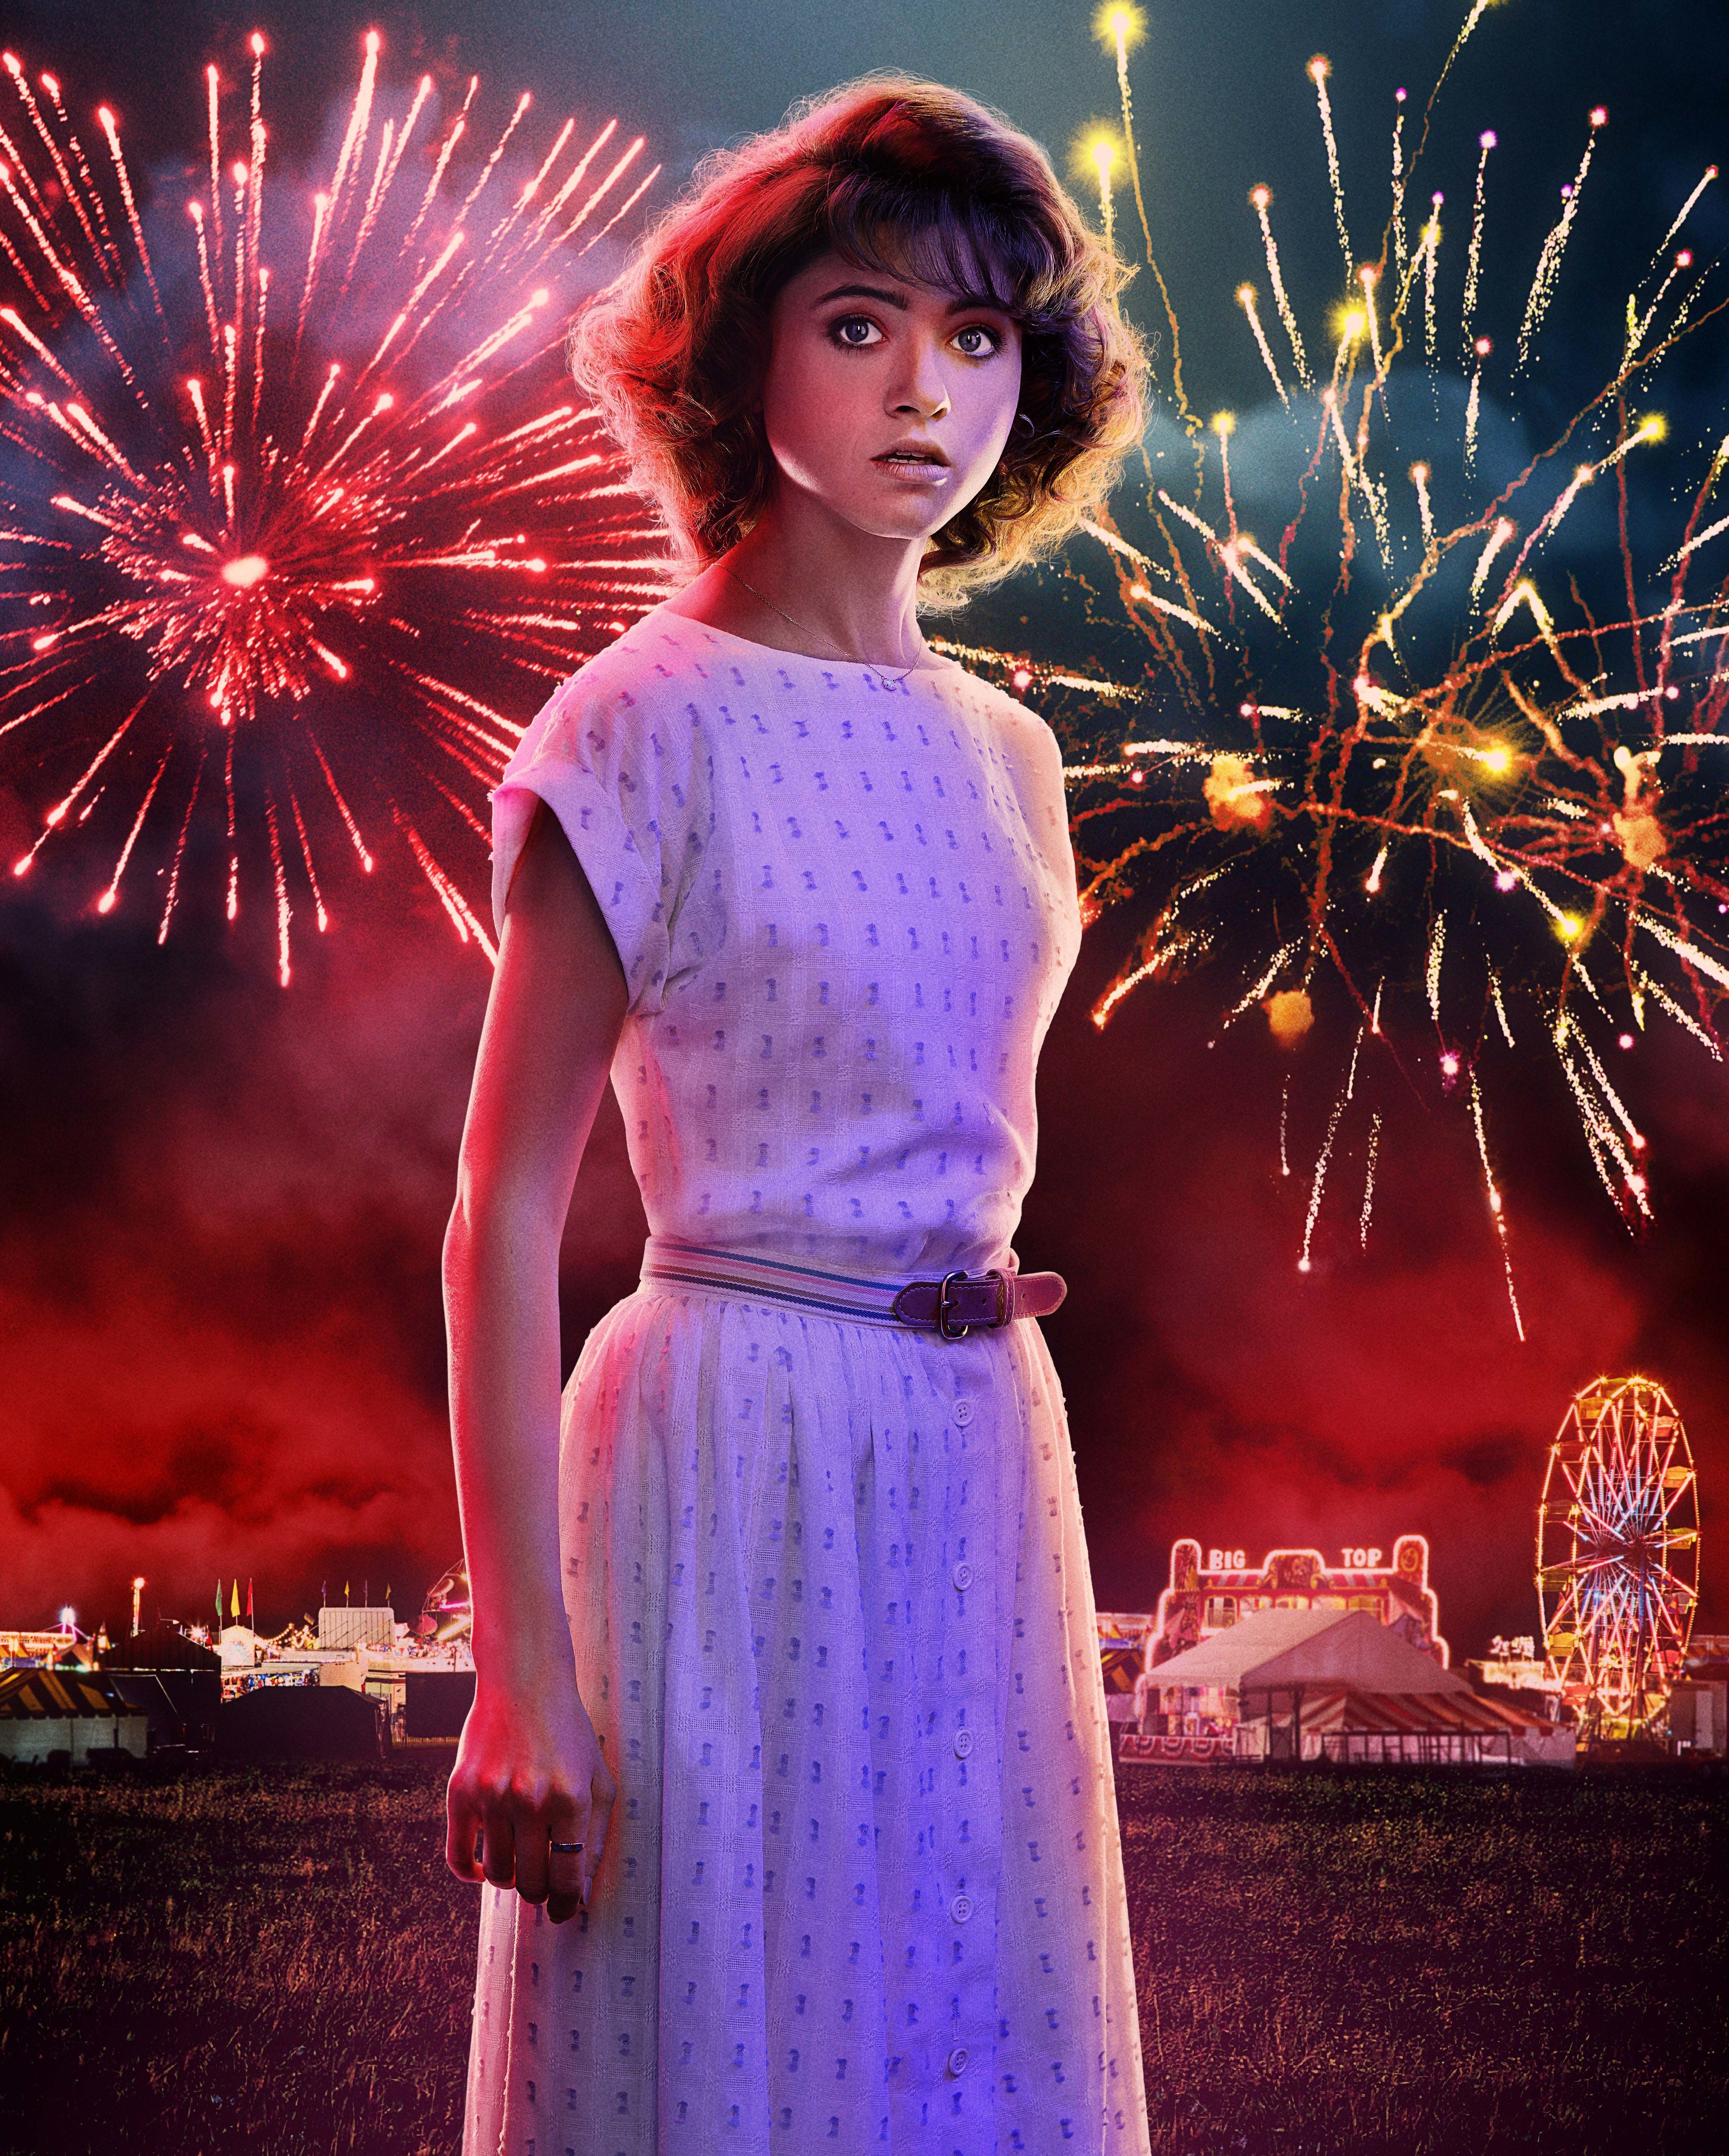 Natalia Dyer Stranger Things Fireworks Poster Wallpaper, HD TV Series 4K Wallpaper, Image, Photo and Background